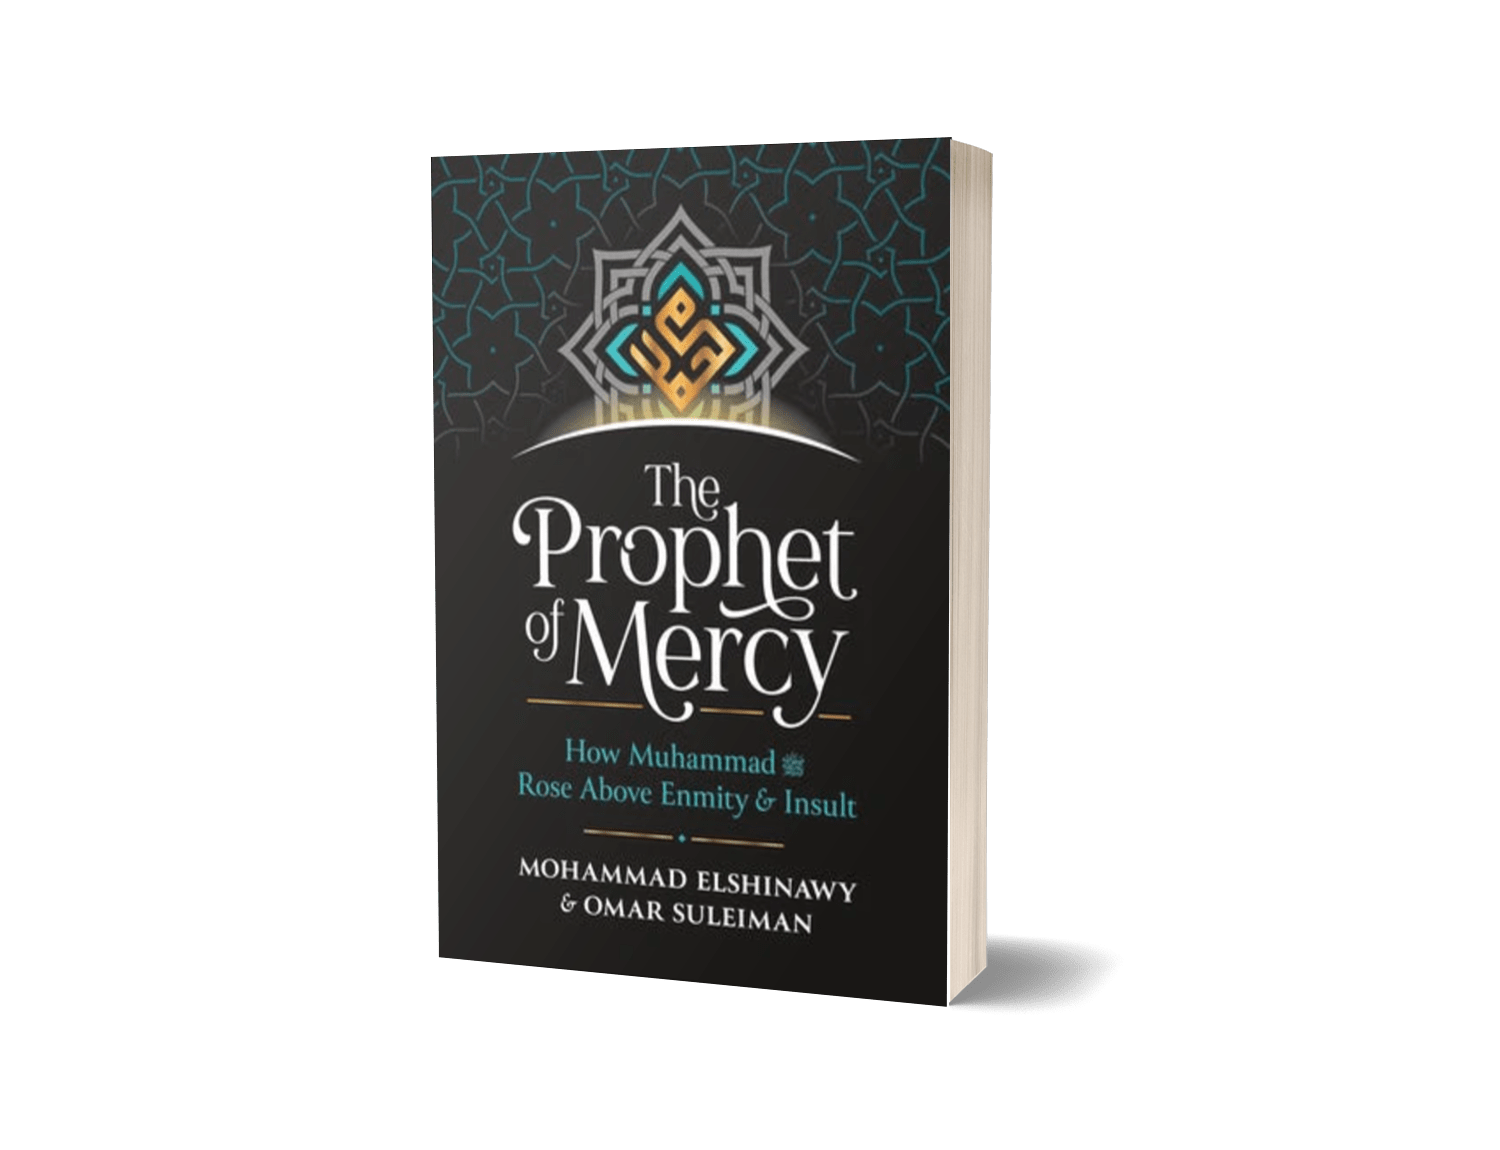 The prophet of Mercy by Omar Suleiman